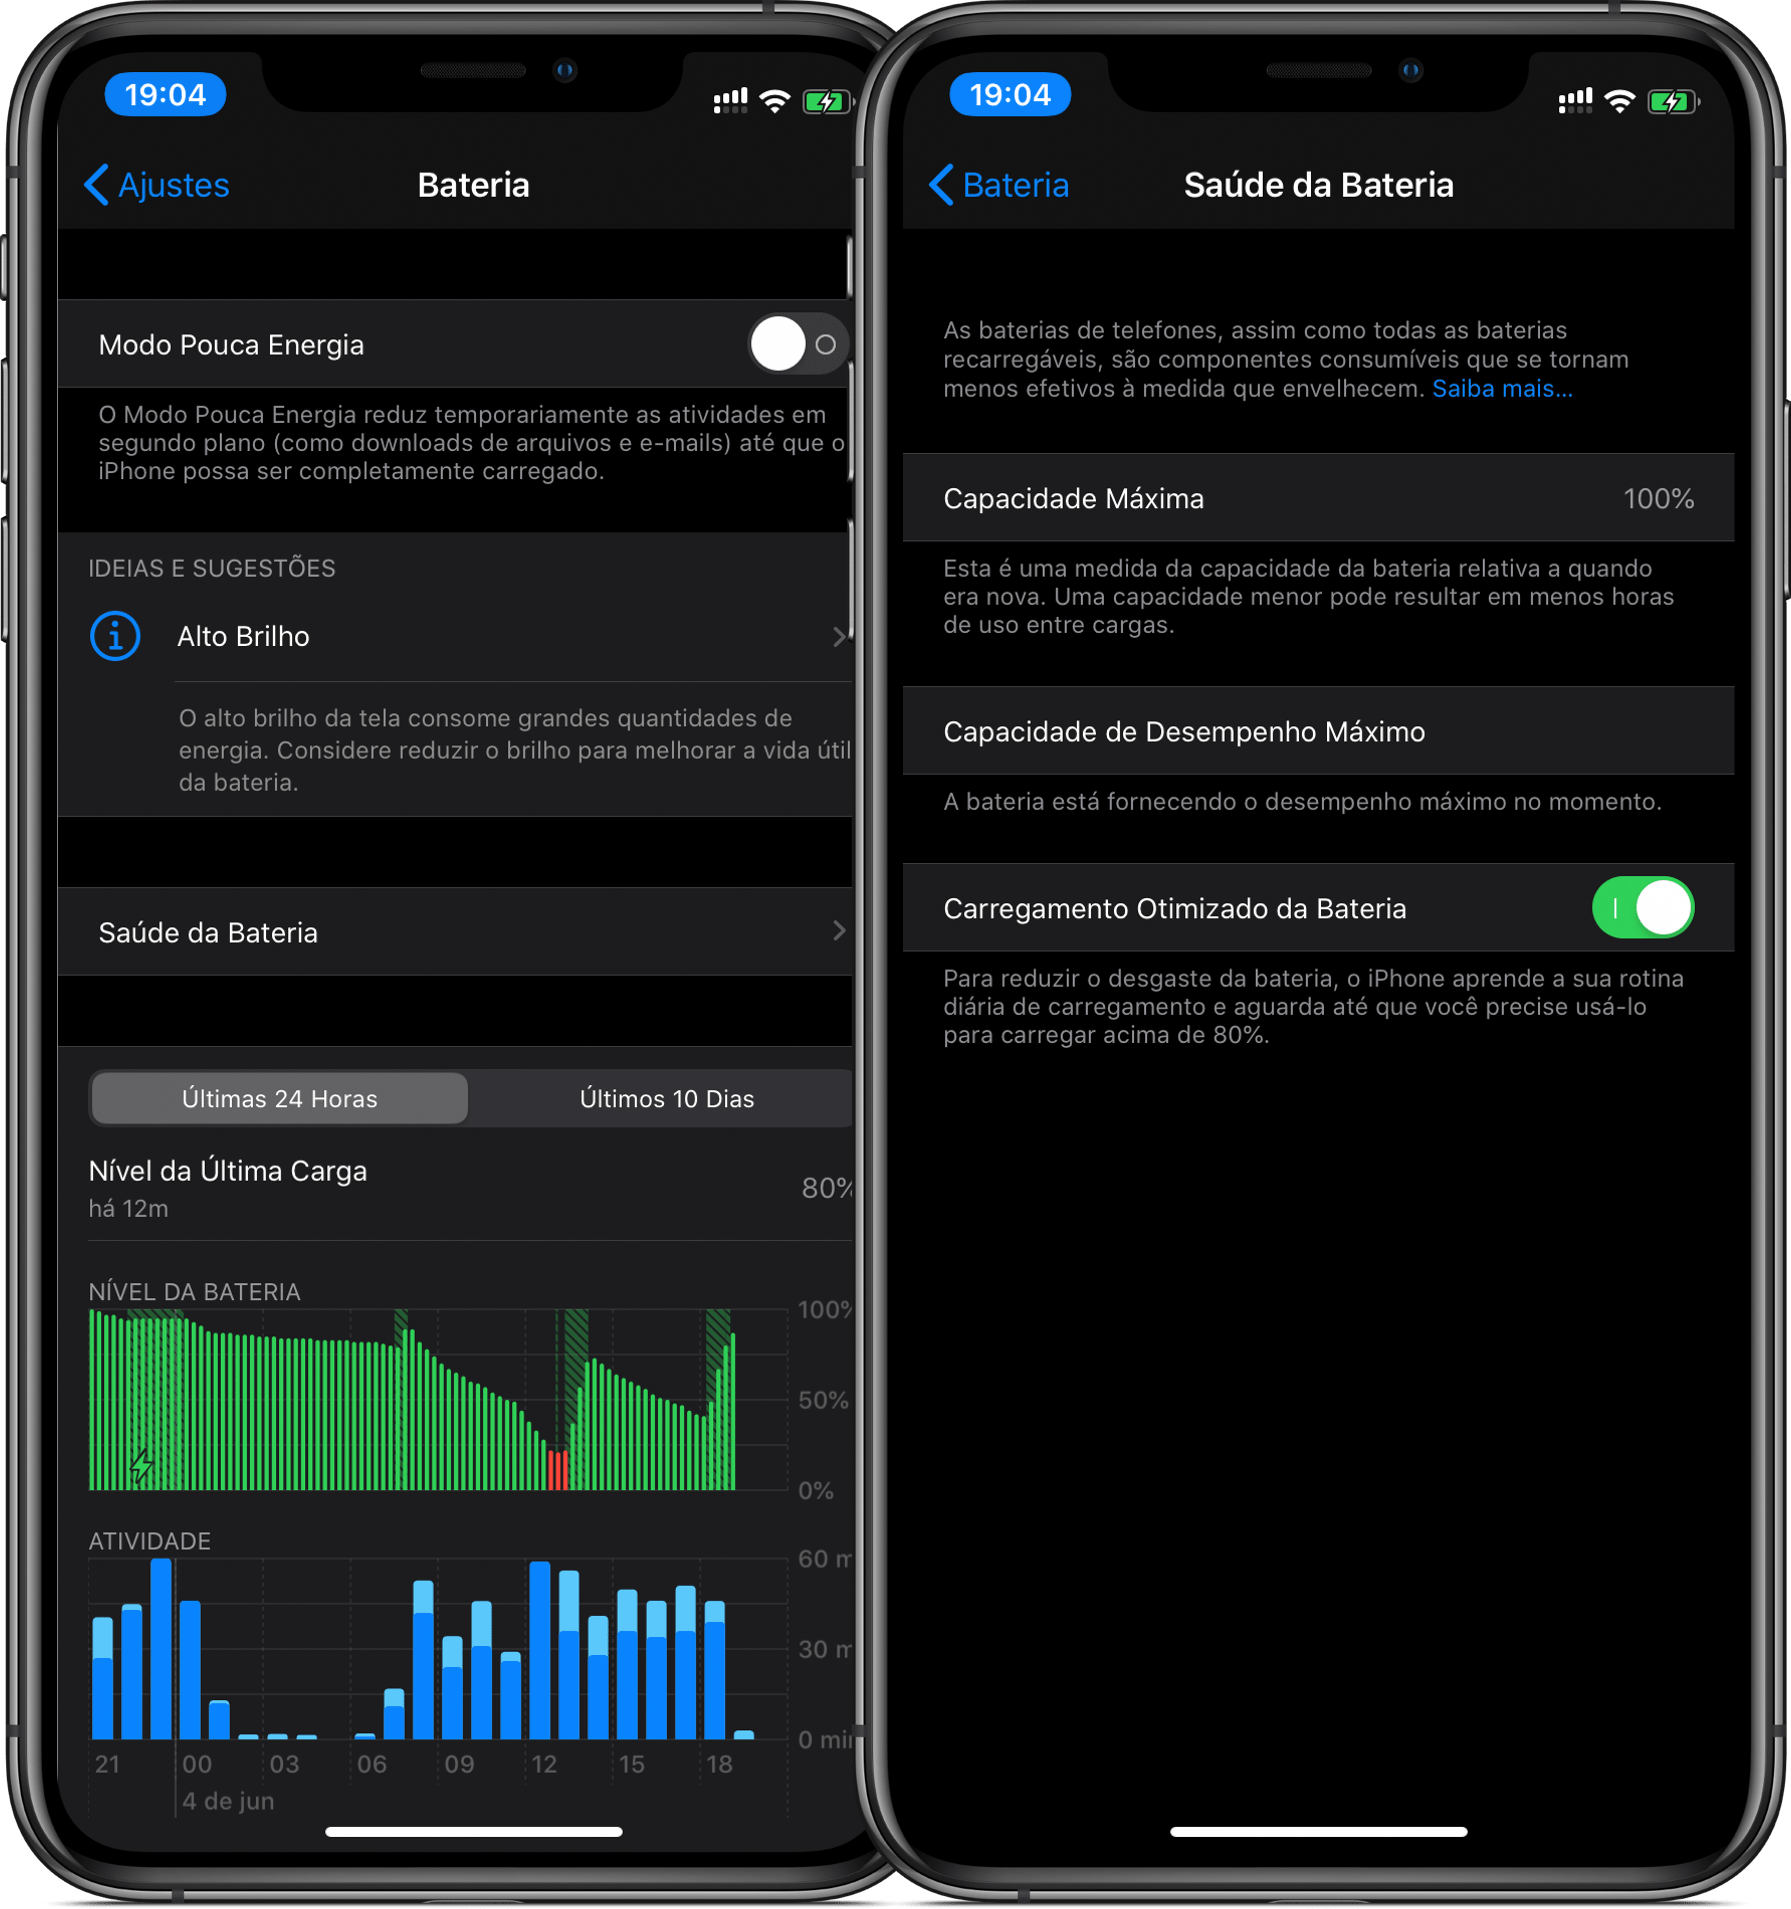 Recurso Carregamento Otimizado da Bateria, do iOS 13